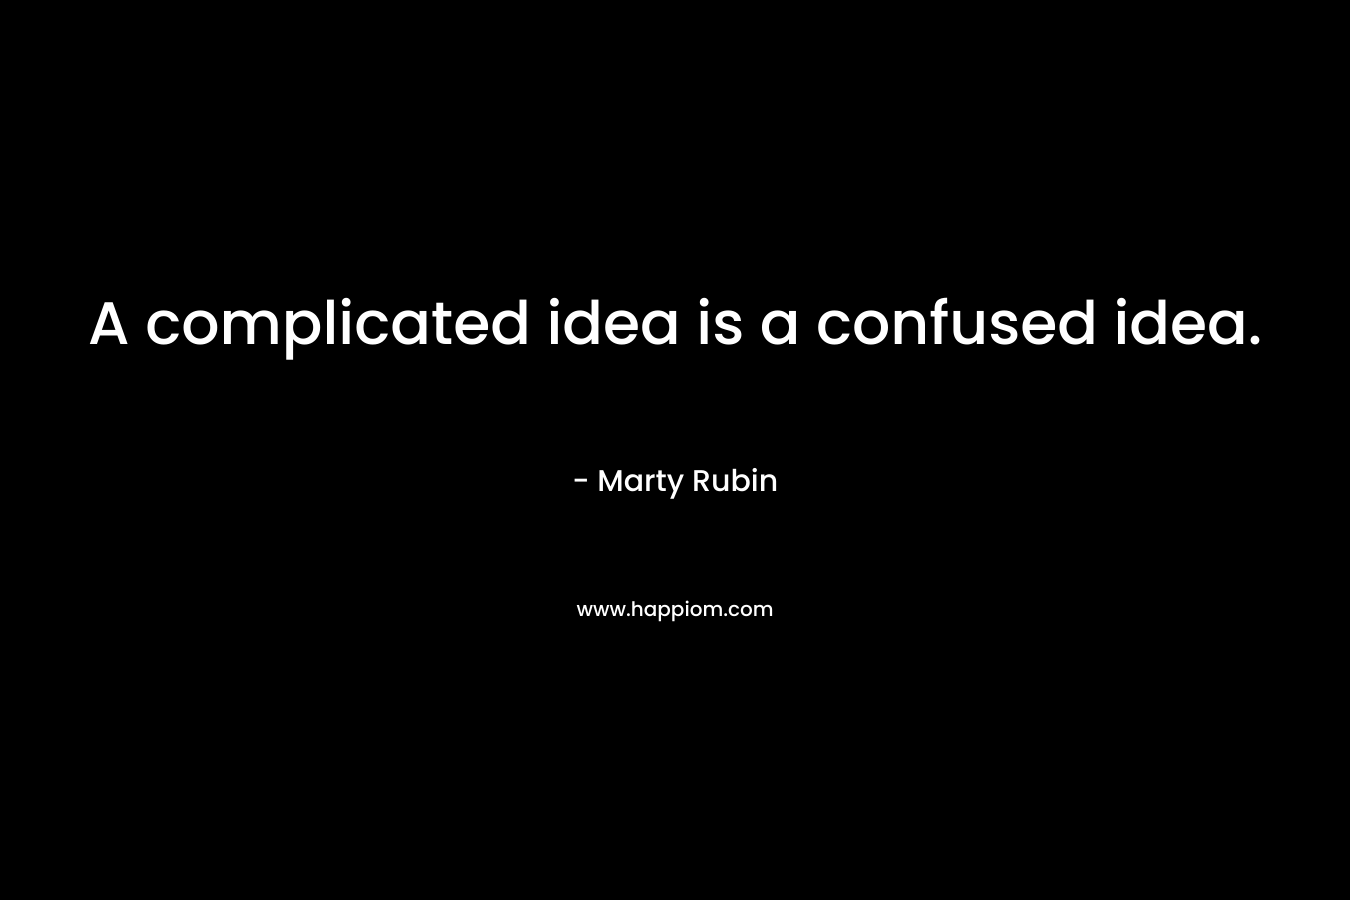 A complicated idea is a confused idea.